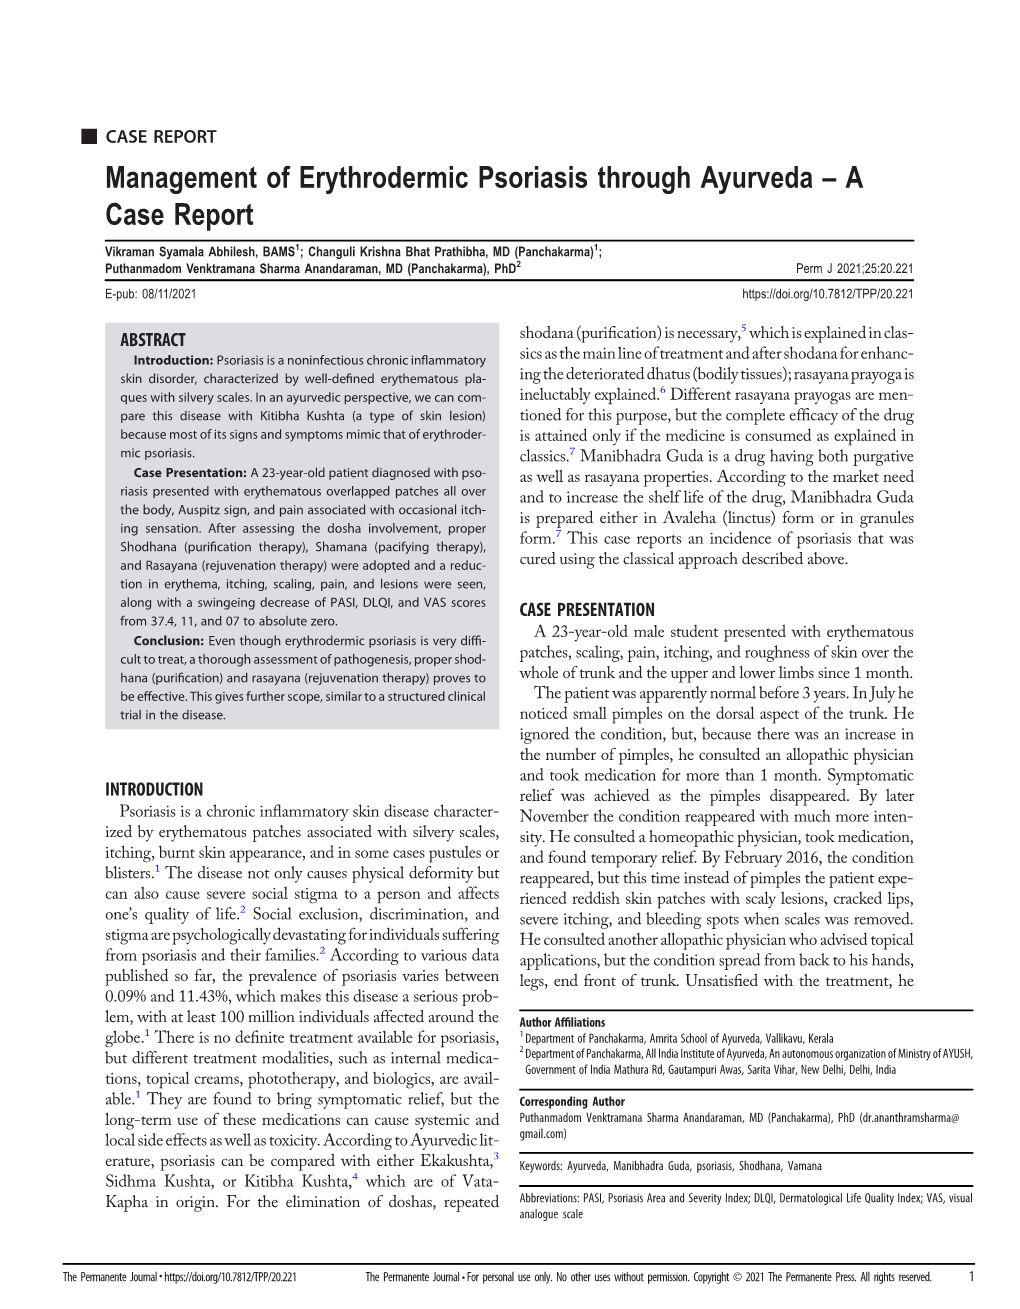 Management of Erythrodermic Psoriasis Through Ayurveda – a Case Report